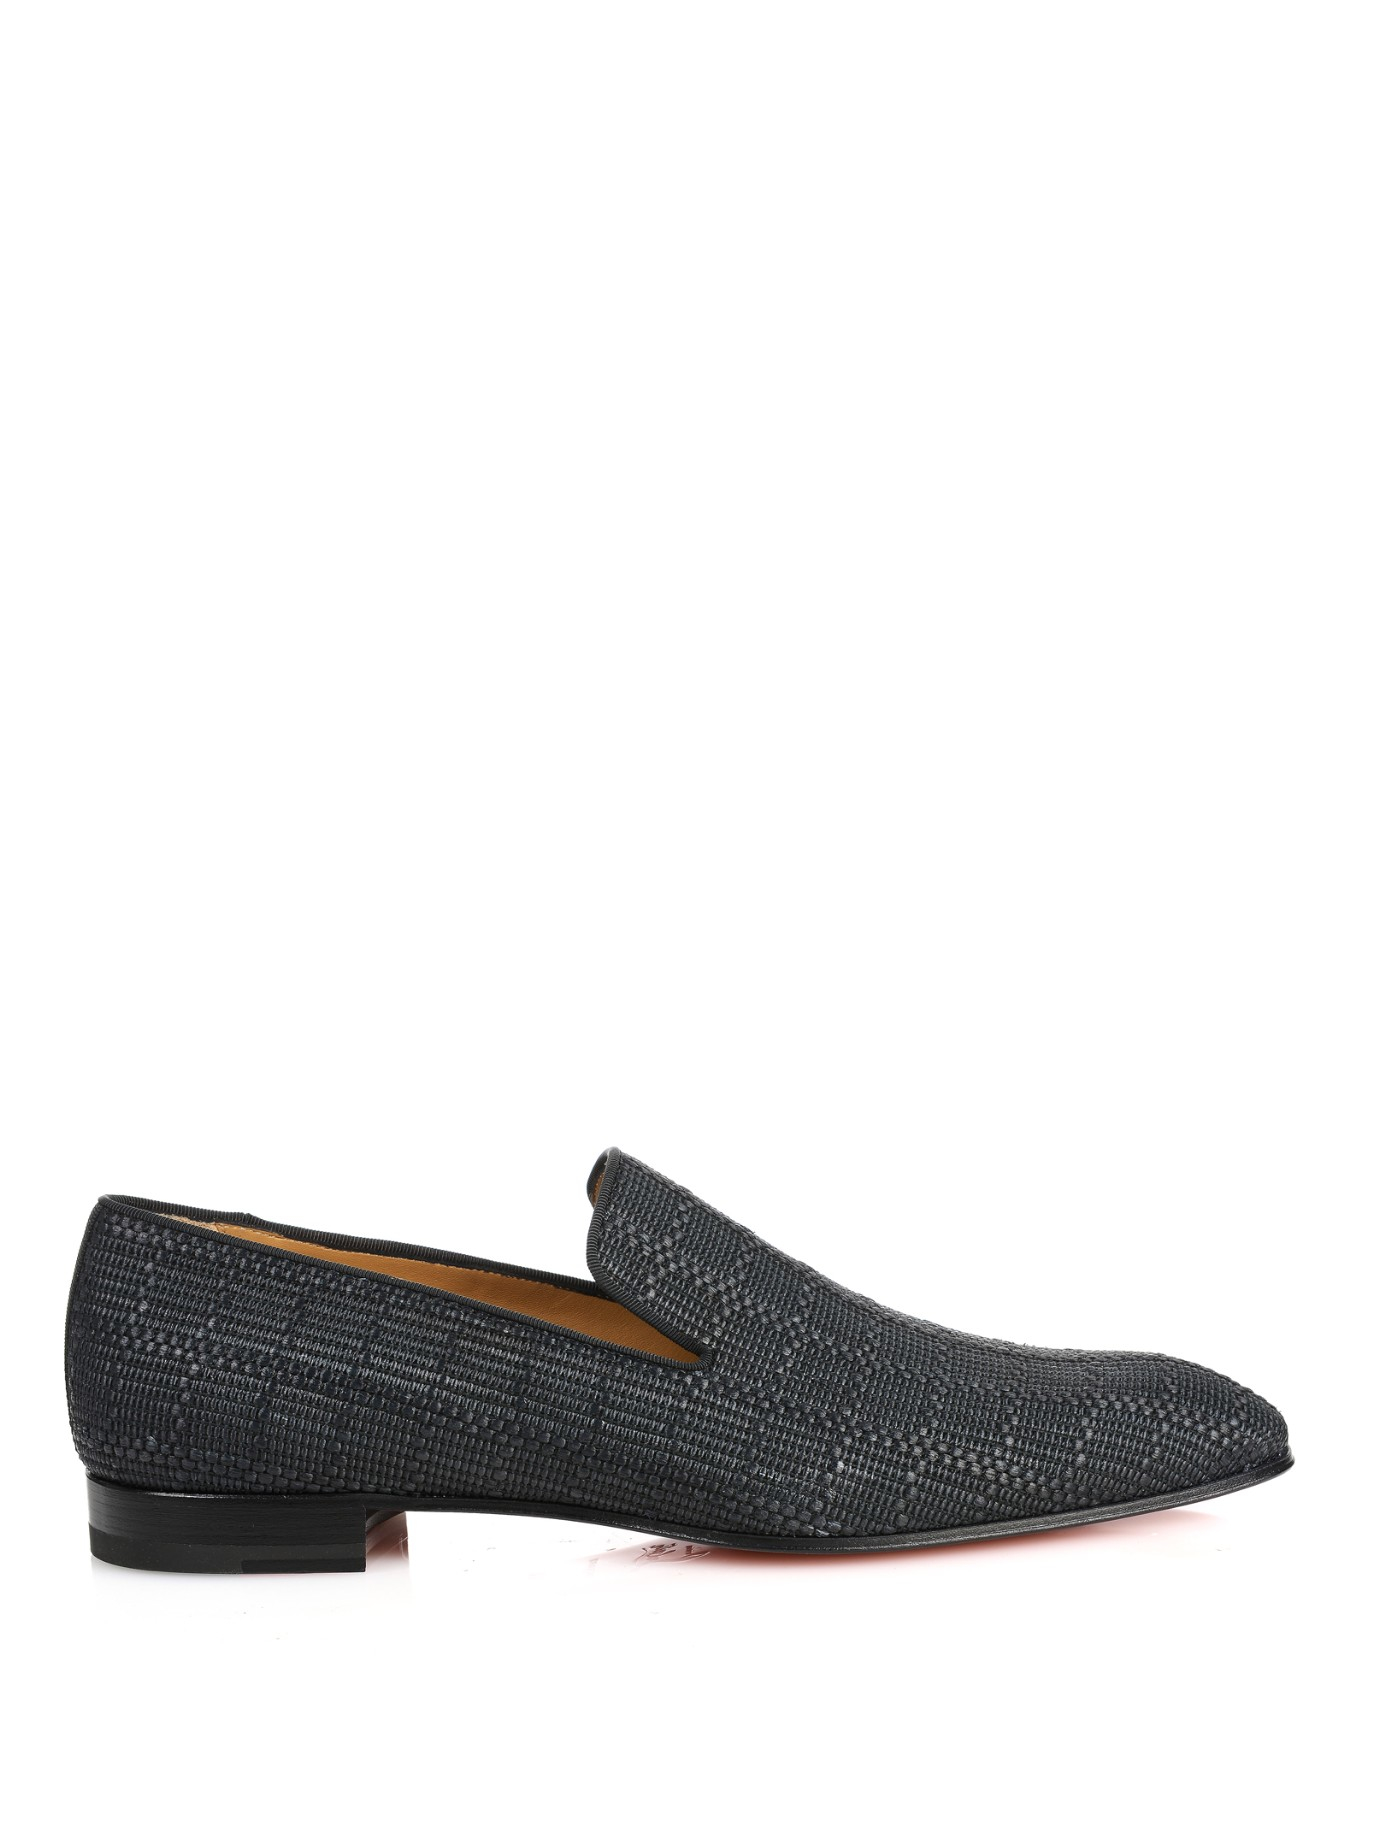 Lyst - Christian Louboutin Dandelion Woven Loafers in Gray for Men